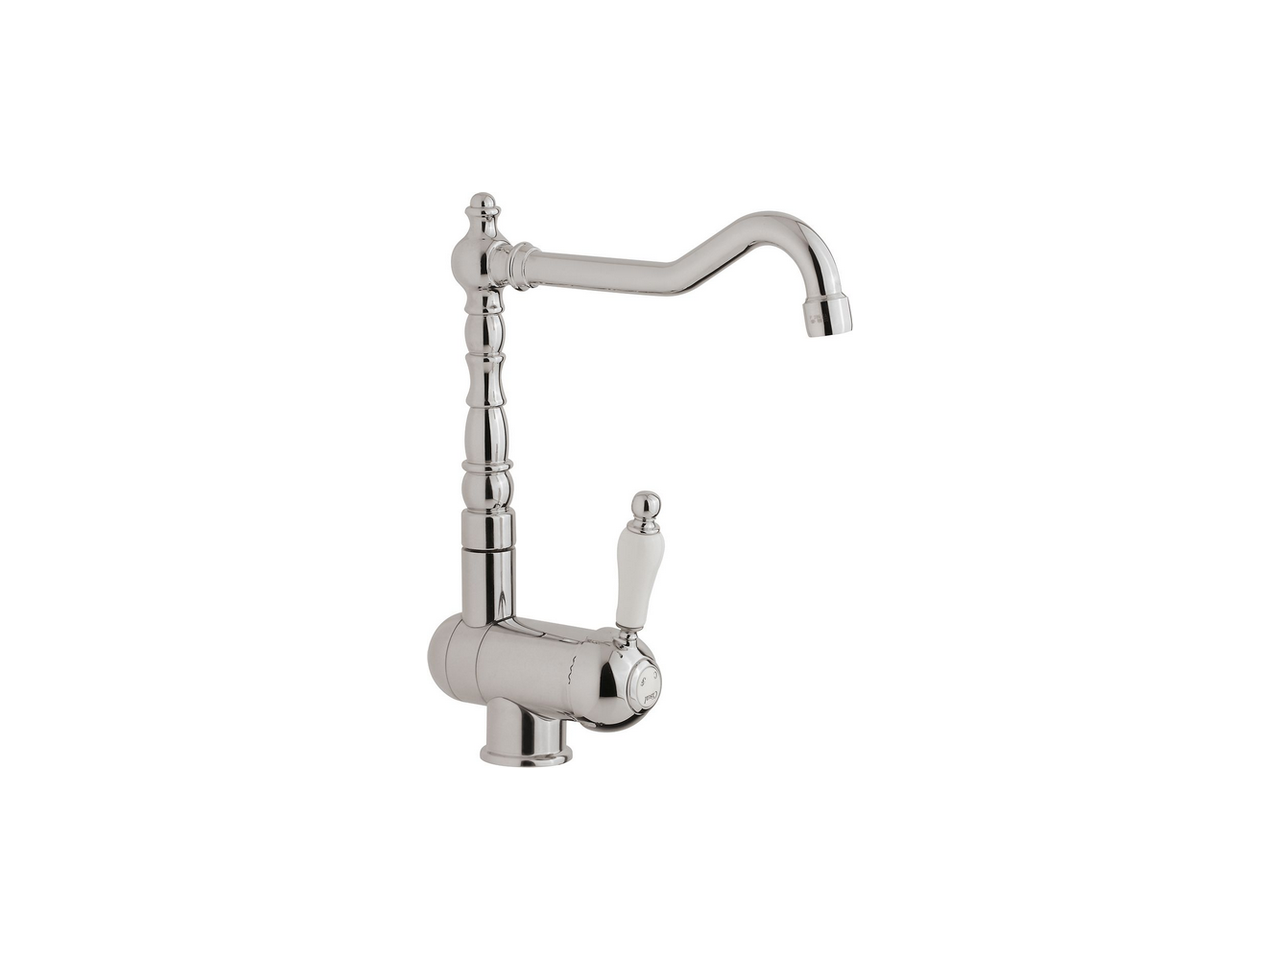 CisalSingle lever sink mixer with reclined spout ARCANA EMPRESS_EM001530